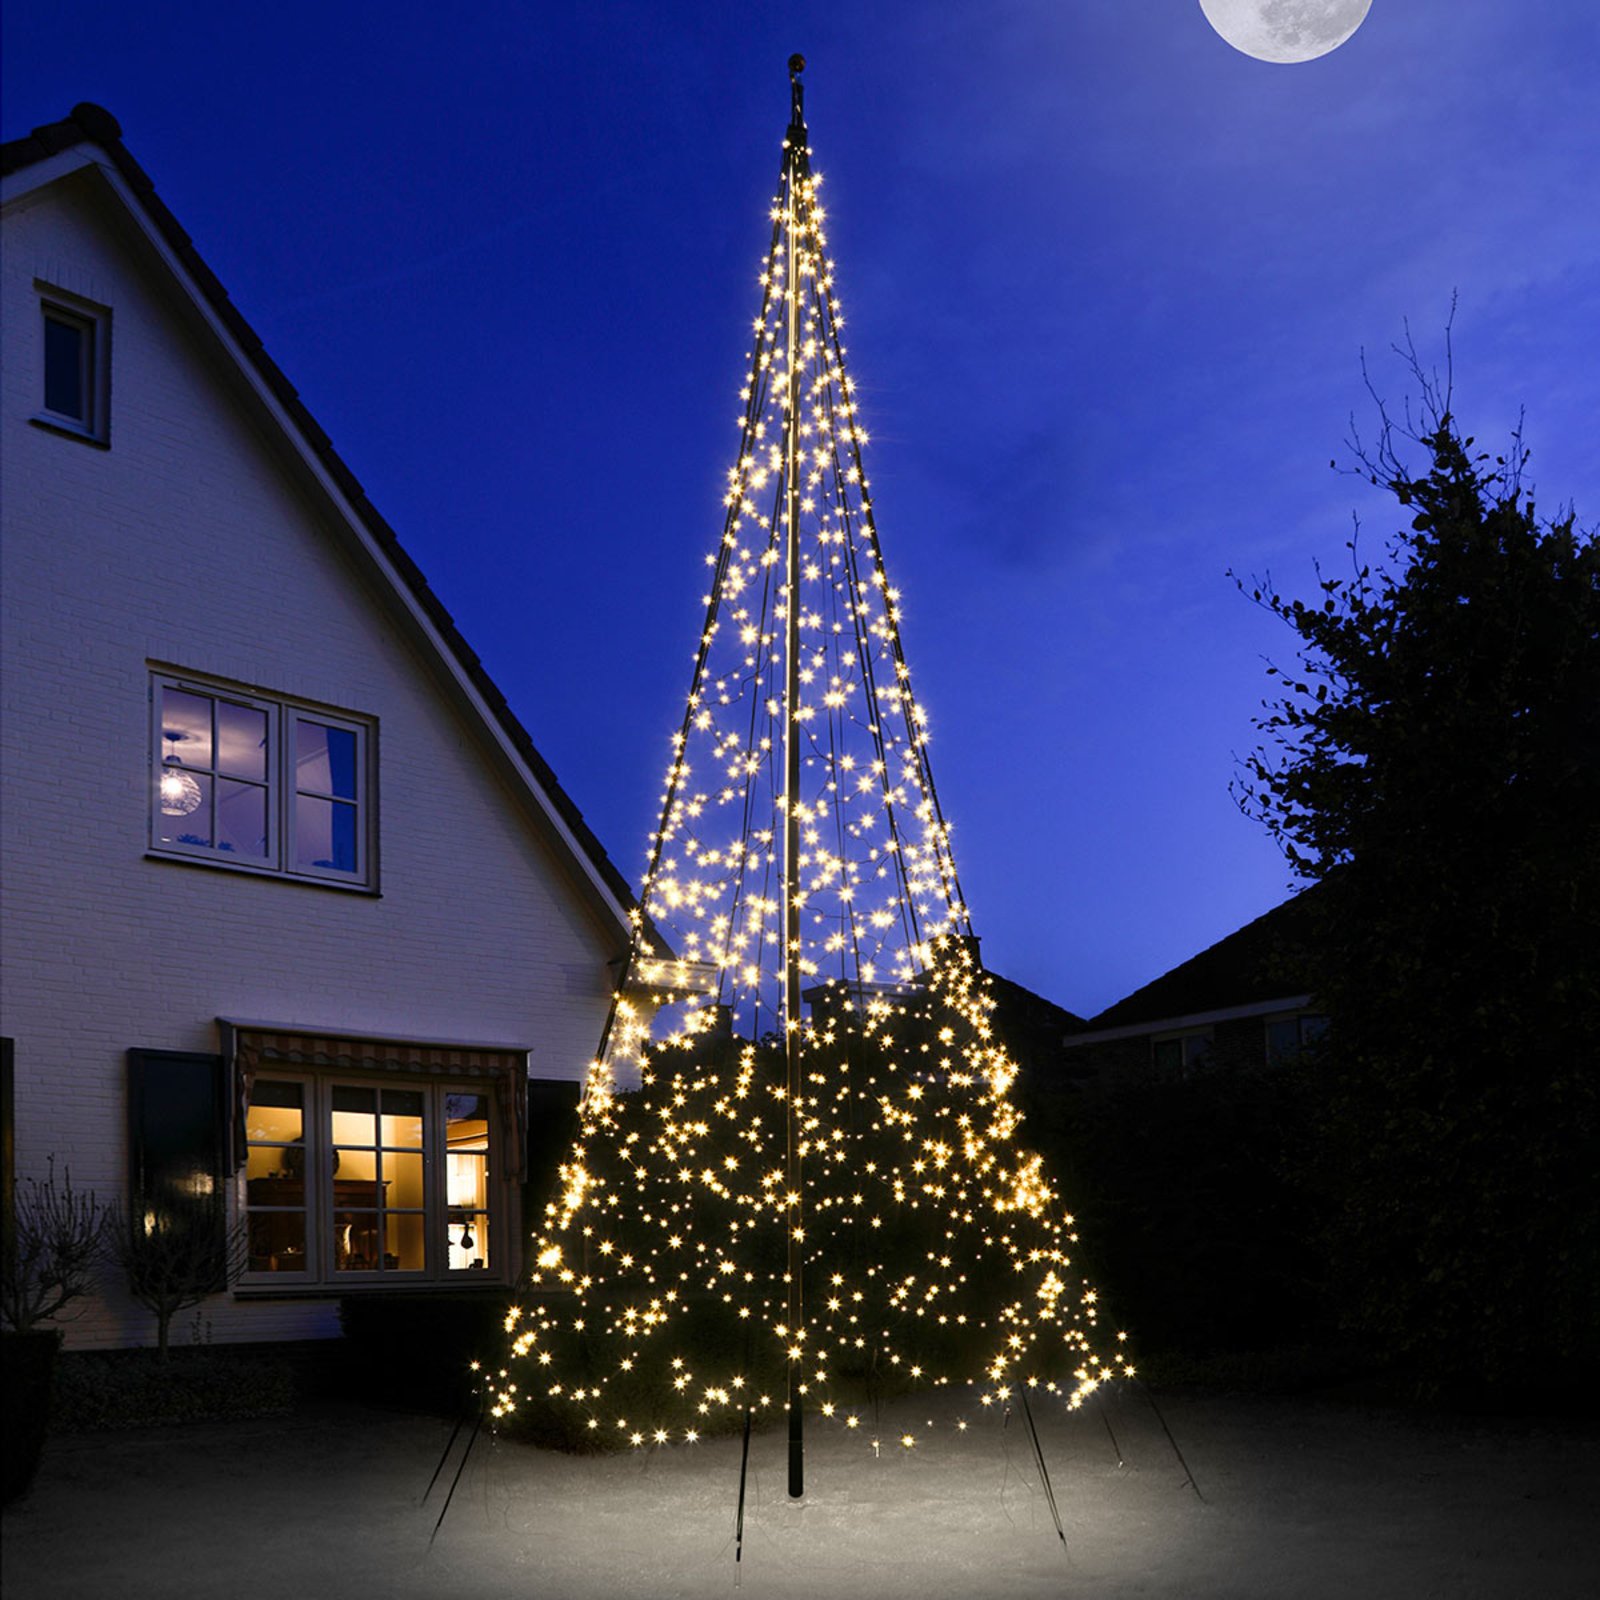 Fairybell Weihnachtsbaum, 6 m, 1200 LEDs